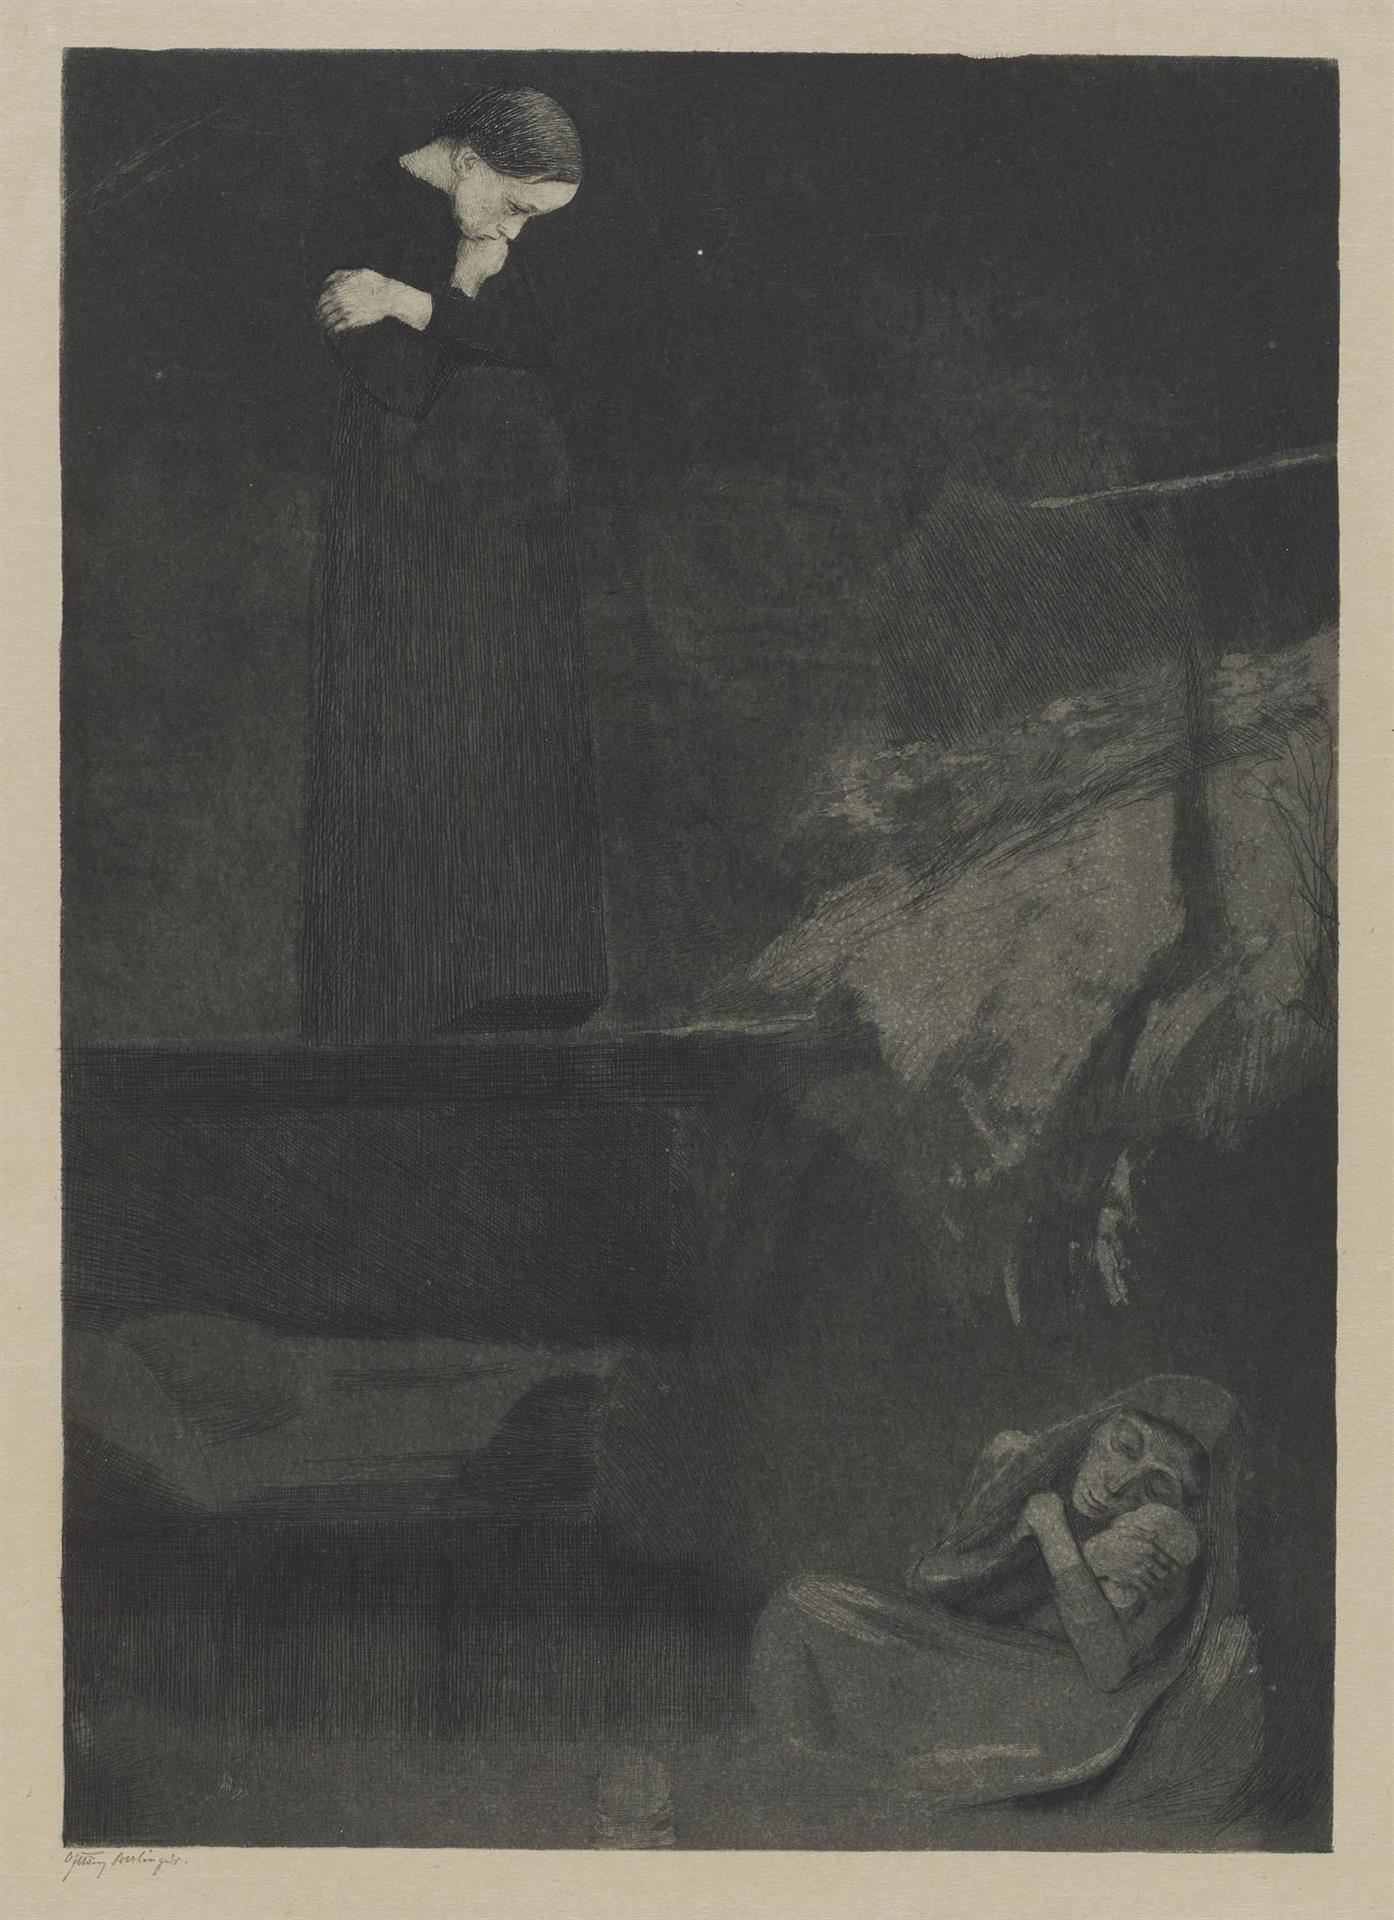 Käthe Kollwitz, Marguerite (Gretchen), 1899, eau-forte, pointe sèche, aquatinte et brunissoir, Kn 45 IV